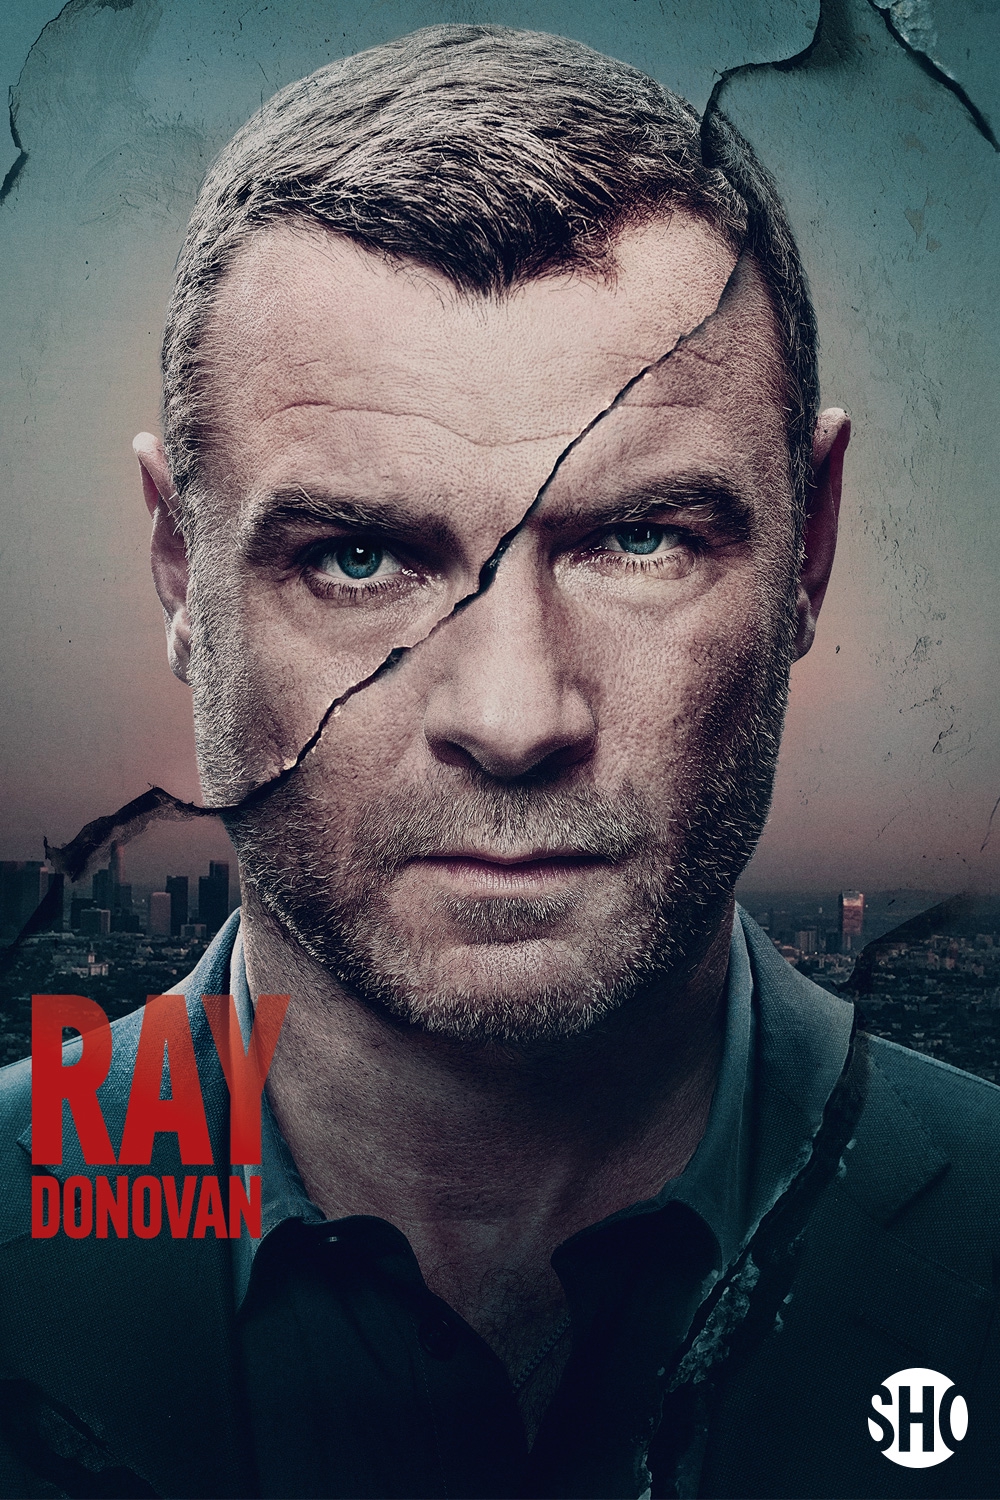 Watch Ray Donovan Online Season 5 Coming Feb 8